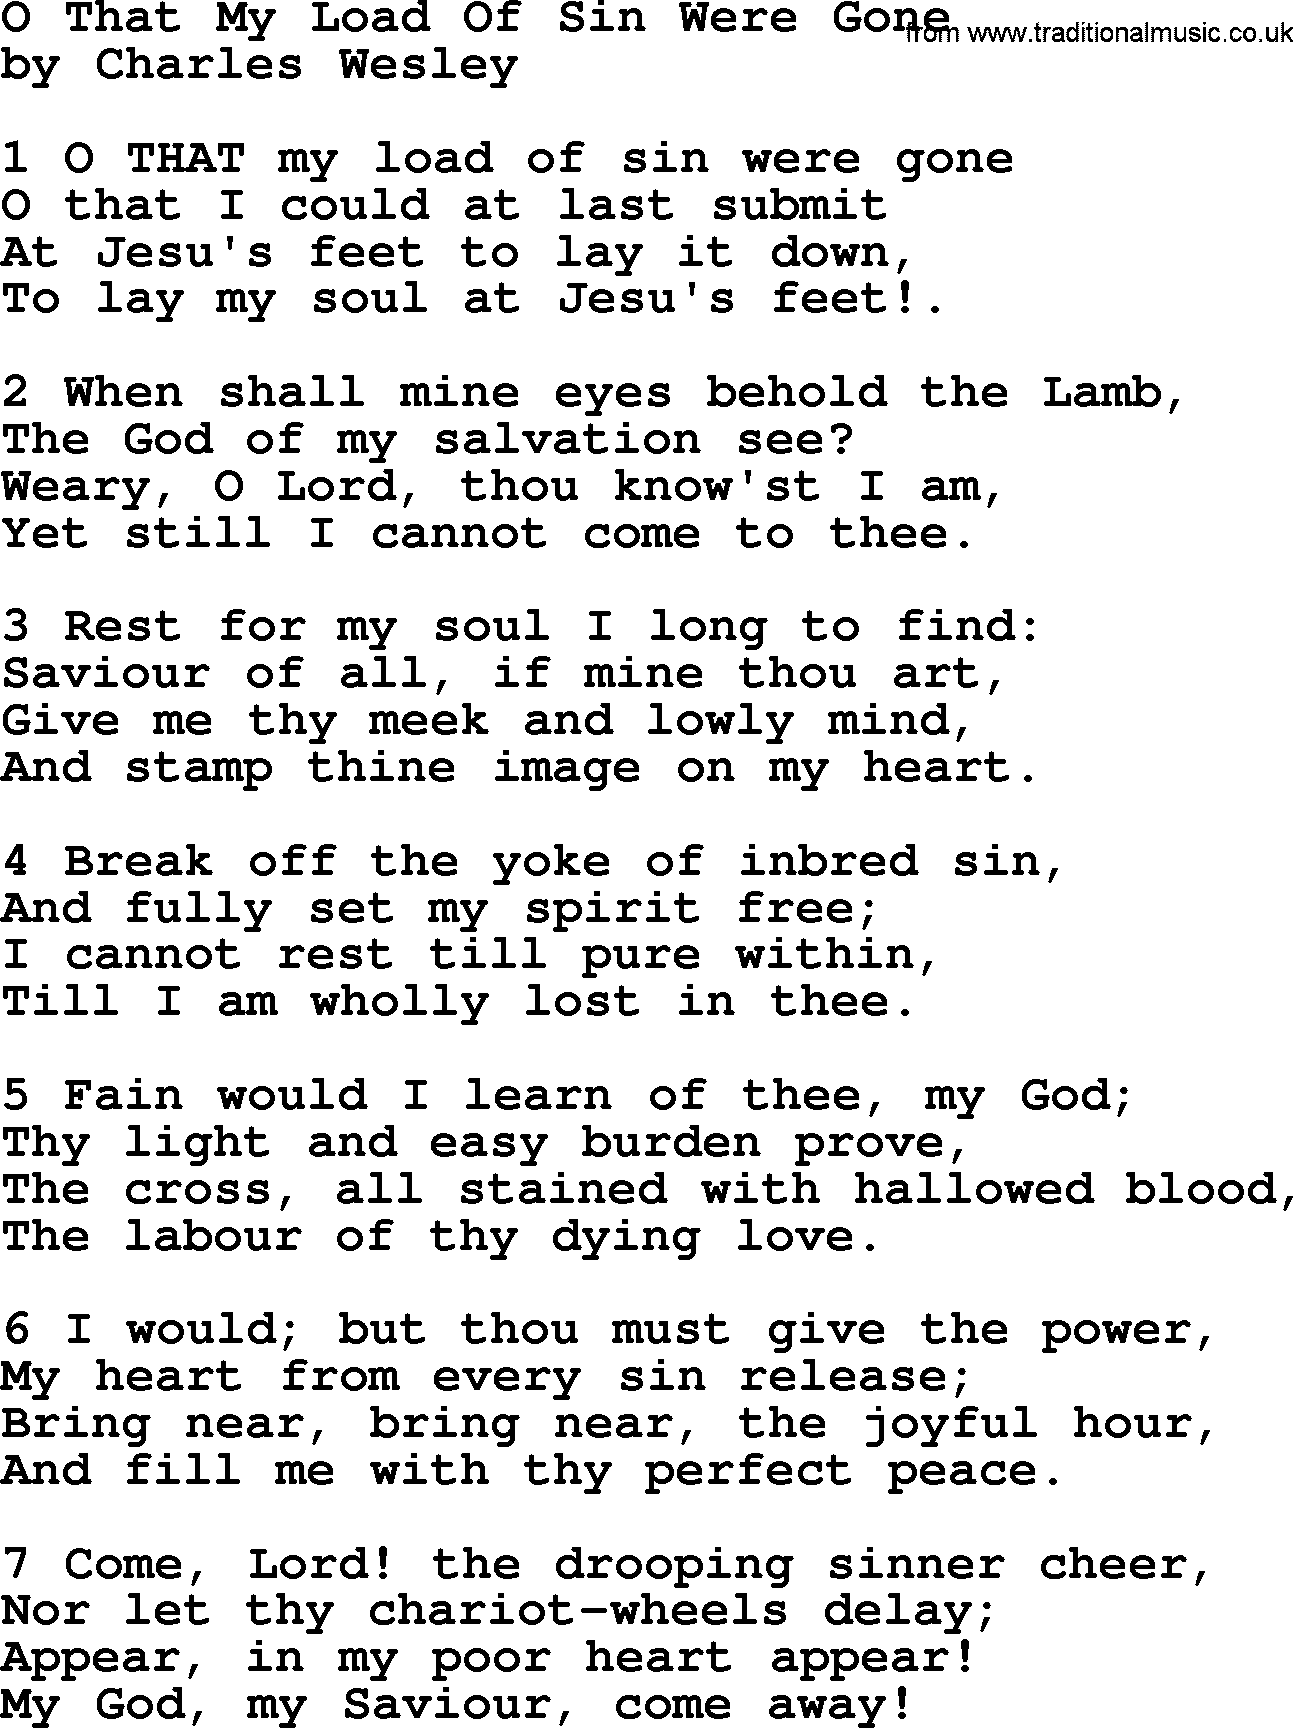 Charles Wesley hymn: O That My Load Of Sin Were Gone, lyrics